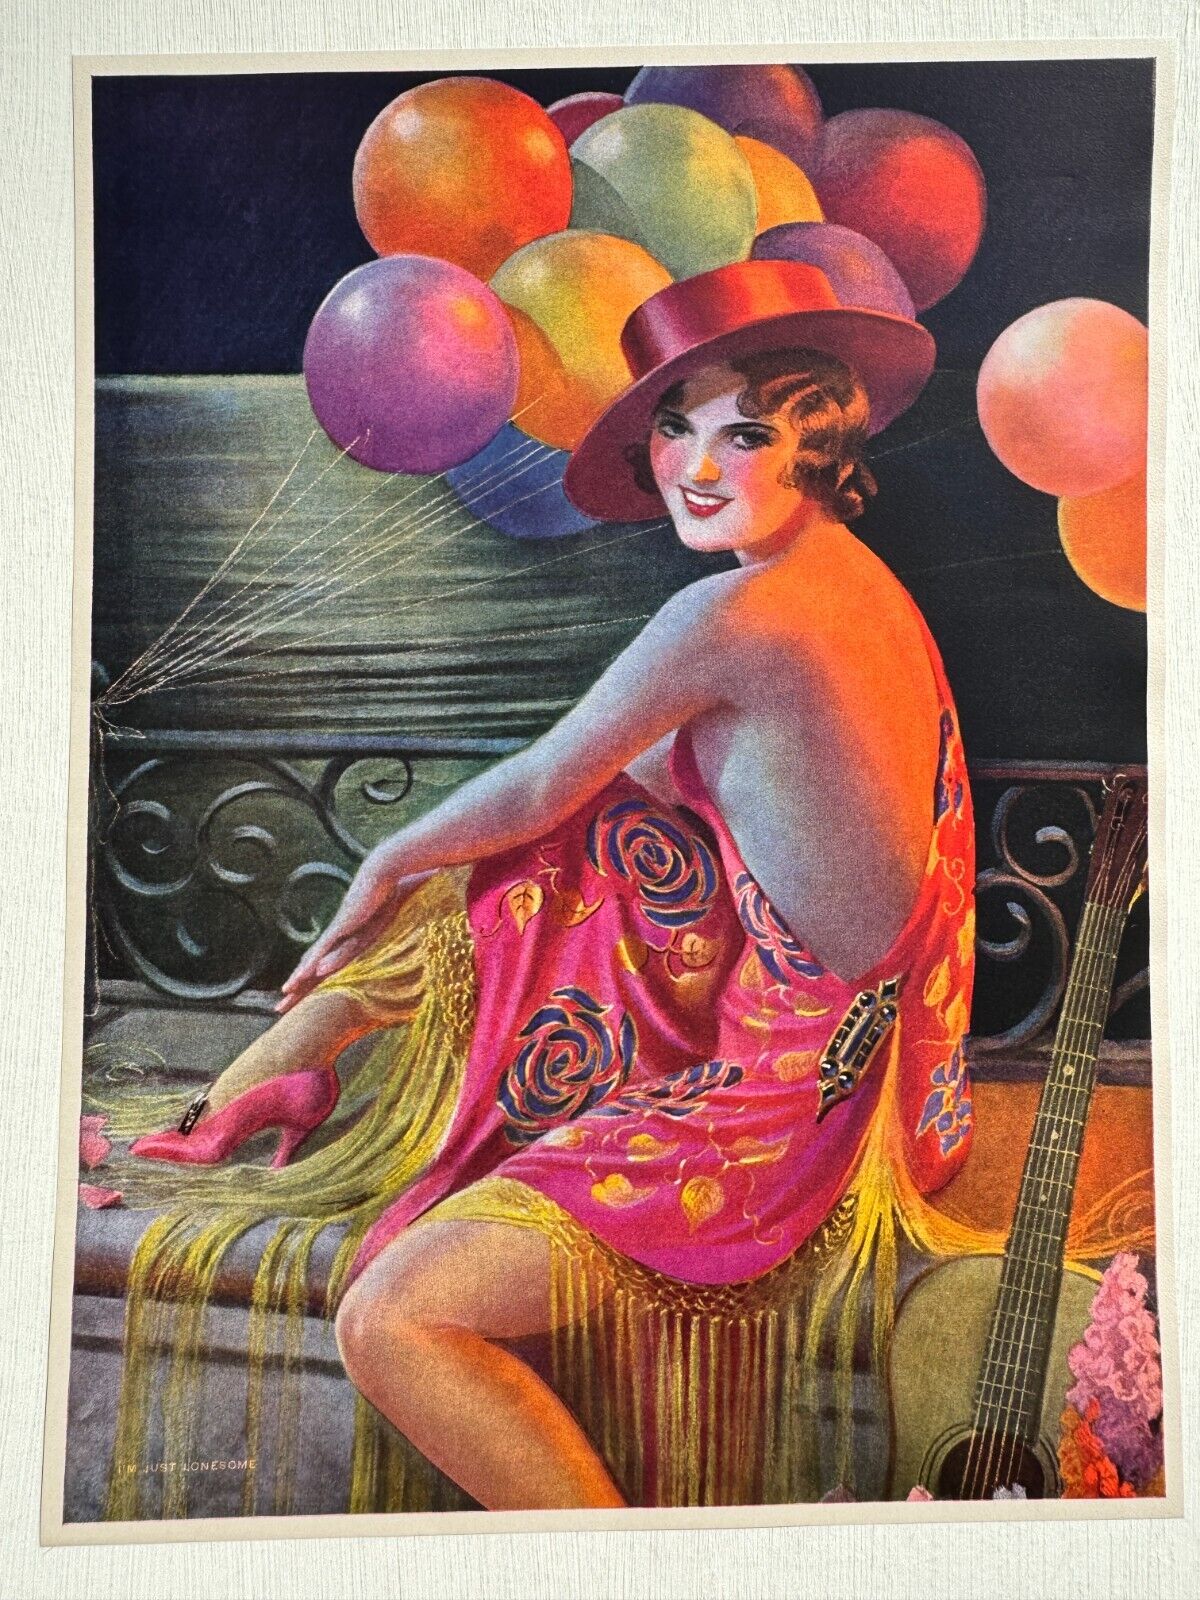 Vintage 1920-30's Pinup Girl Picture by Gene Pressler- Im So Lonesome- Flapper